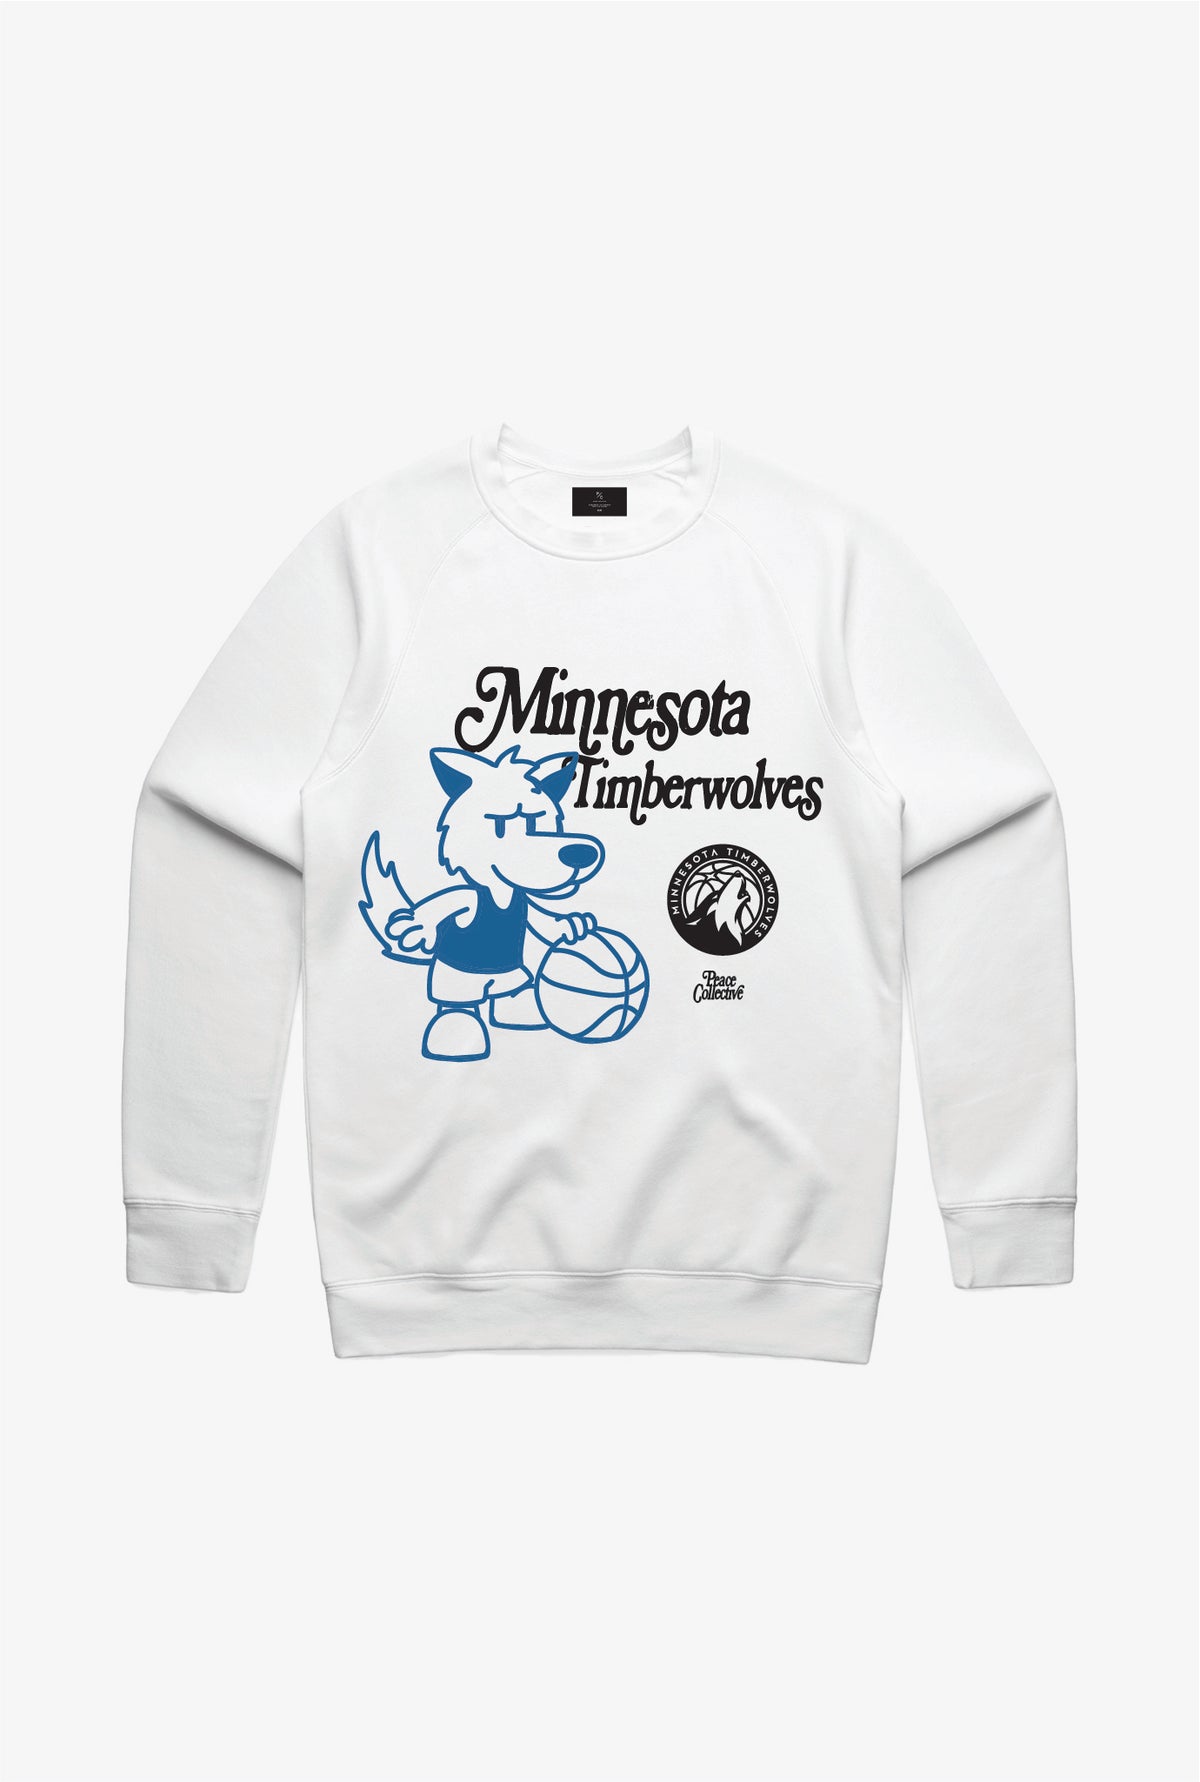 Minnesota Timberwolves Mascot Crewneck - White